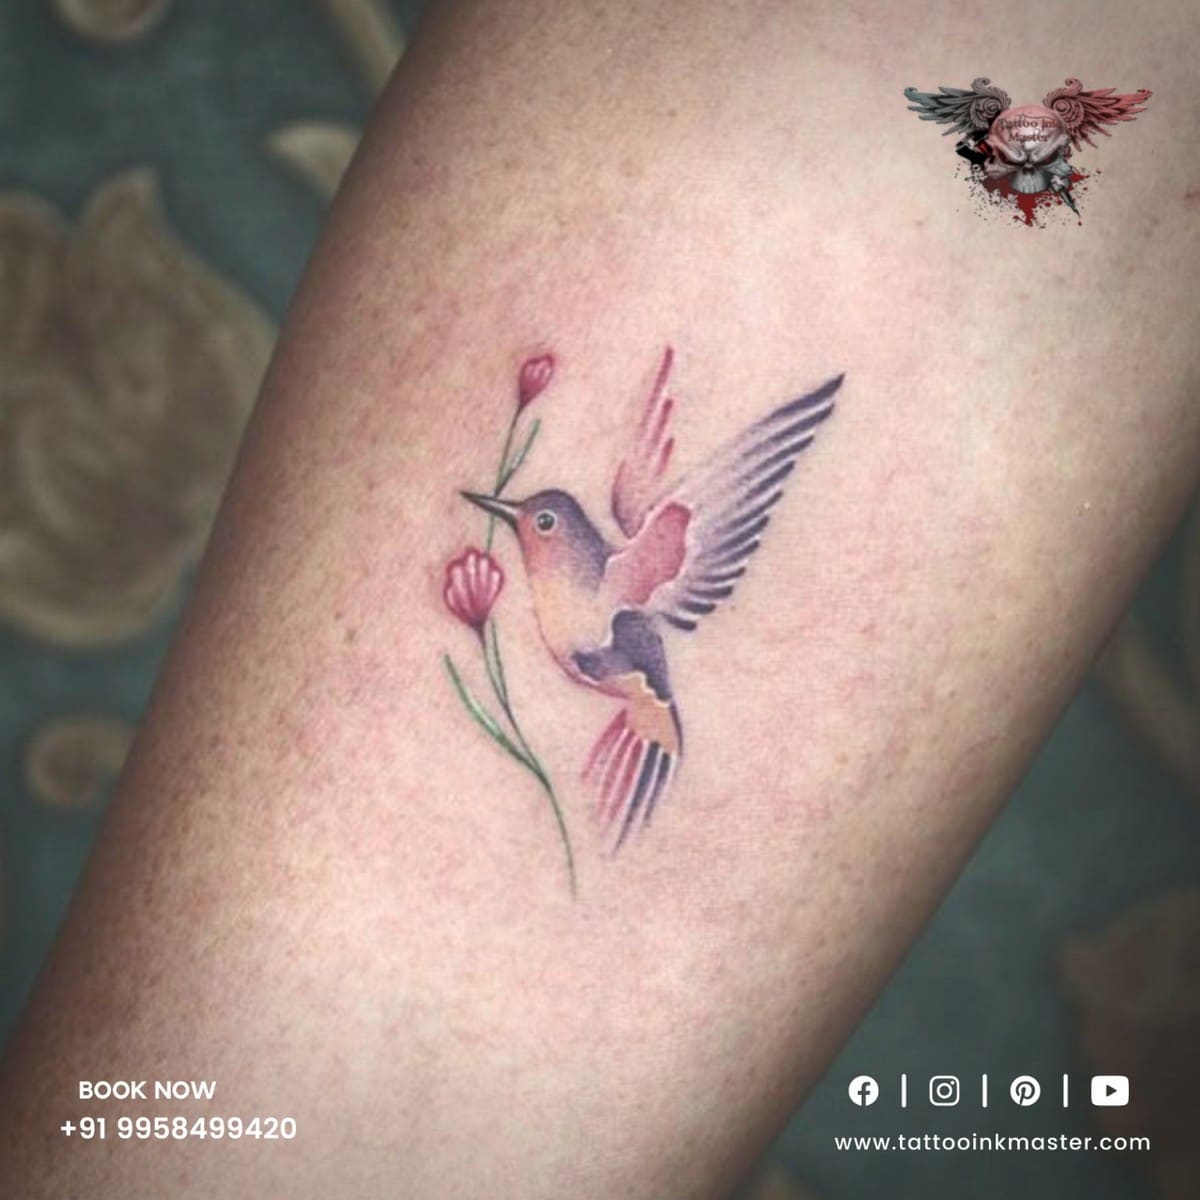 Colorful Looking Small Bird Tattoo | Tattoo Ink Master